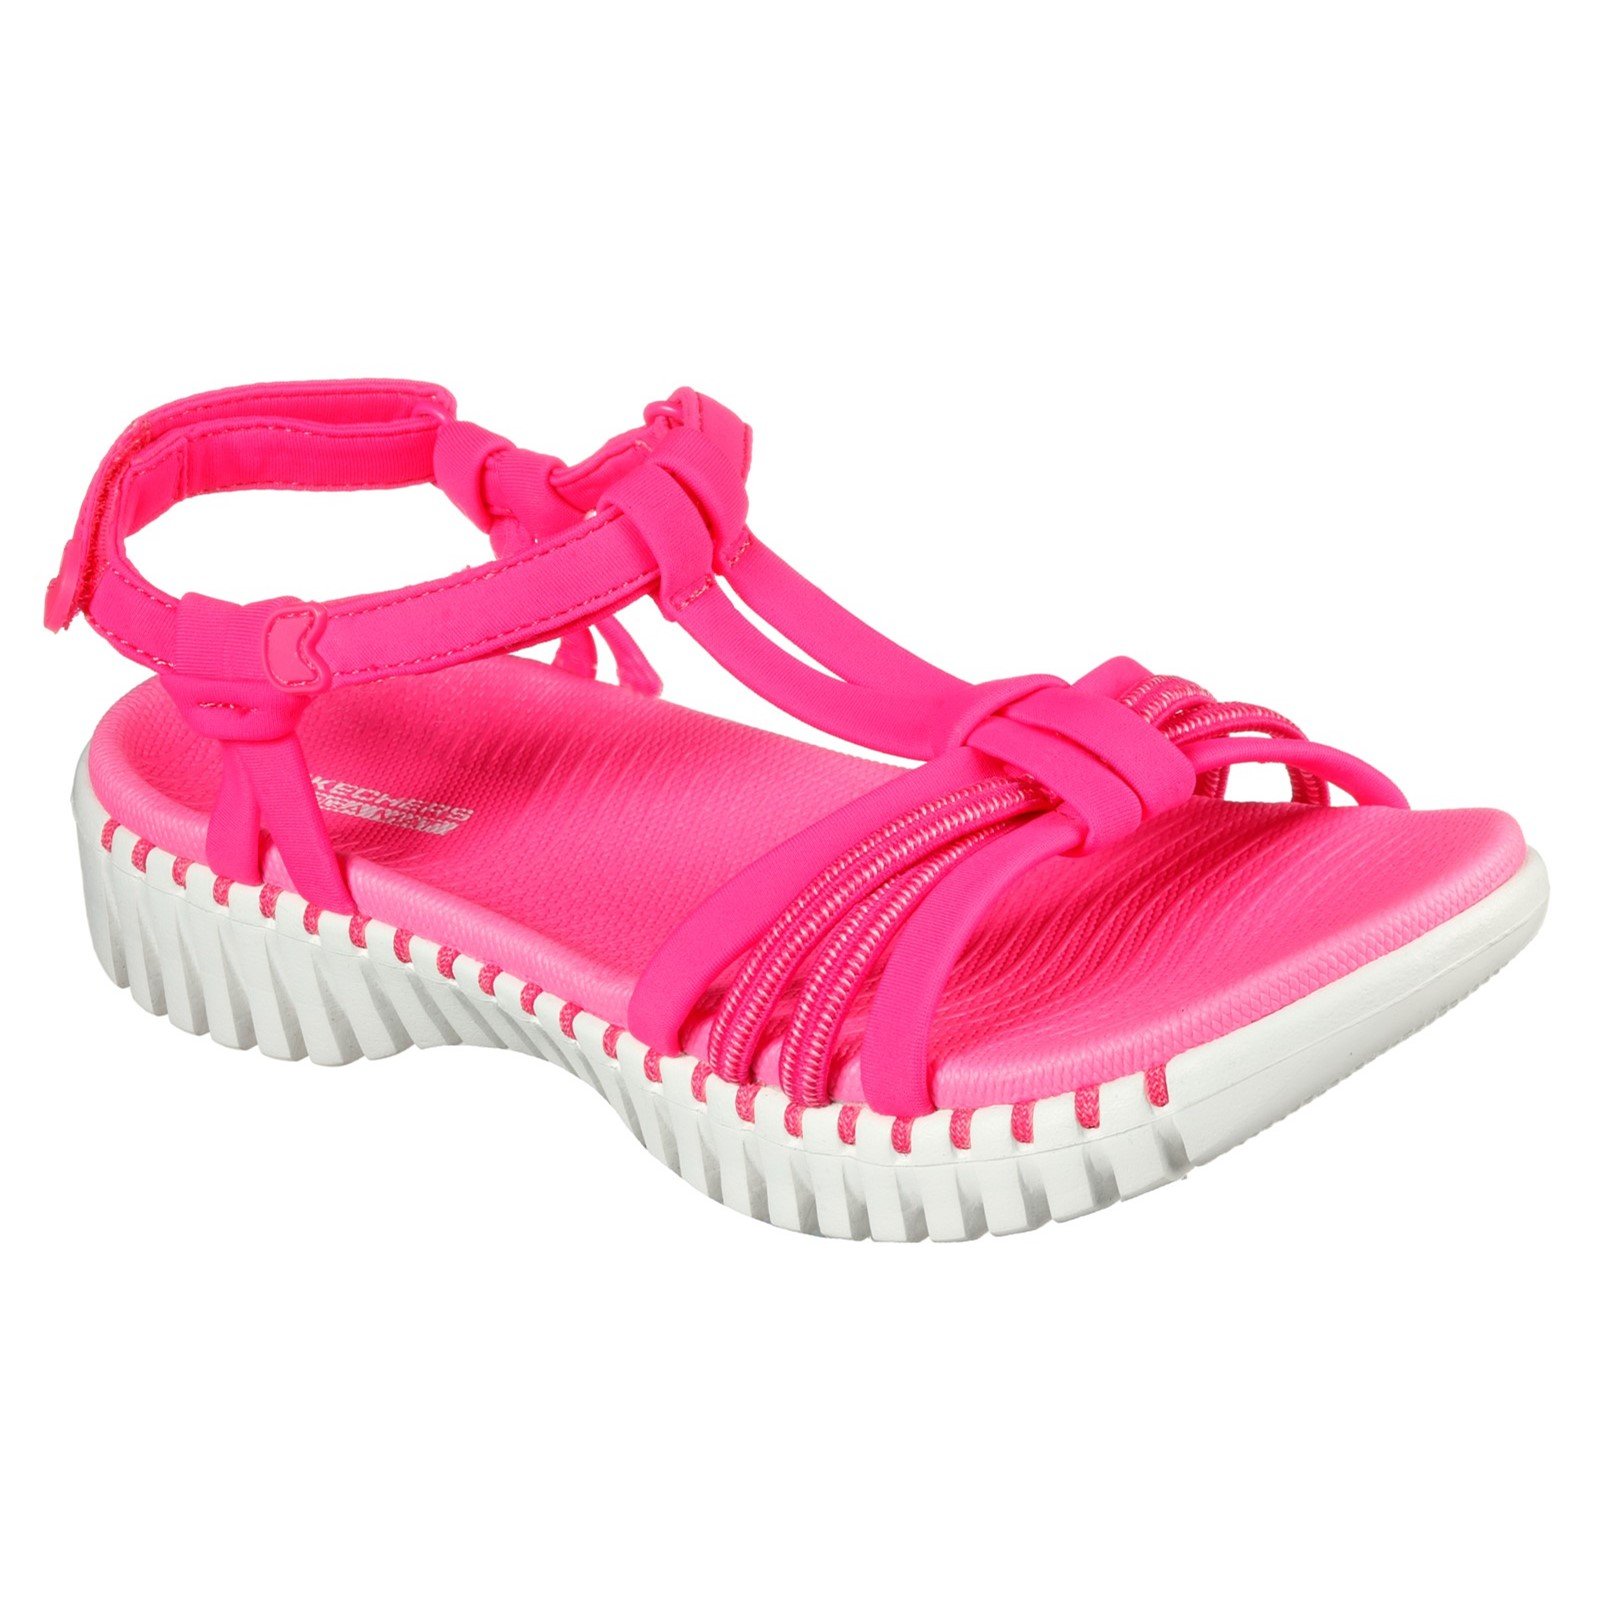 Skechers Women's Go Walk Smart Summer Sandal Various Colours 32156 - Pink 5